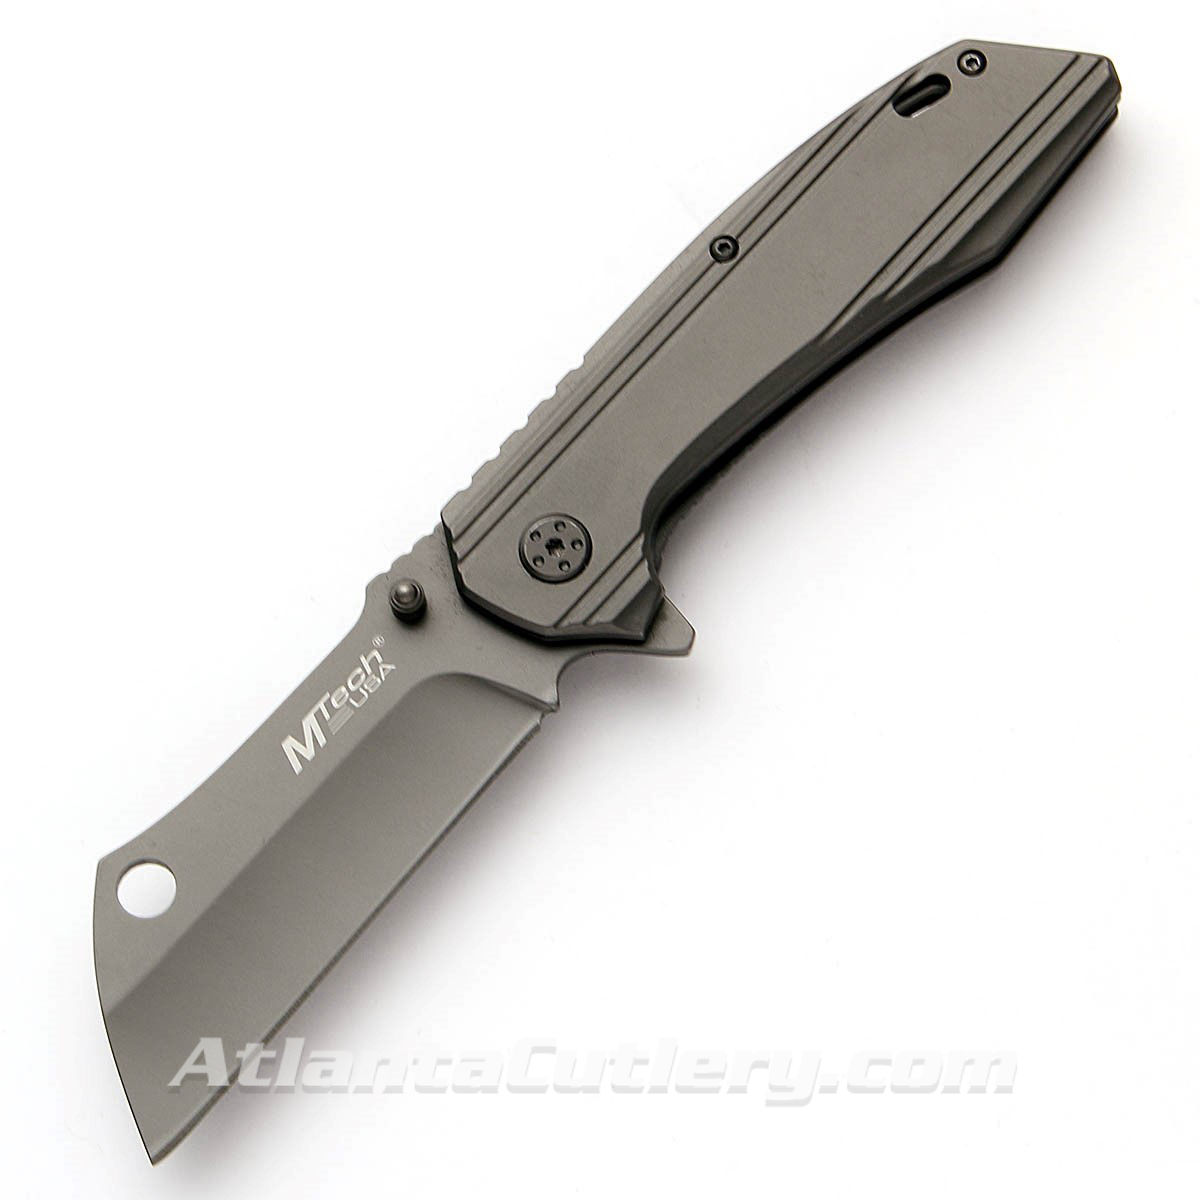 MTech Folding Cleaver Knife